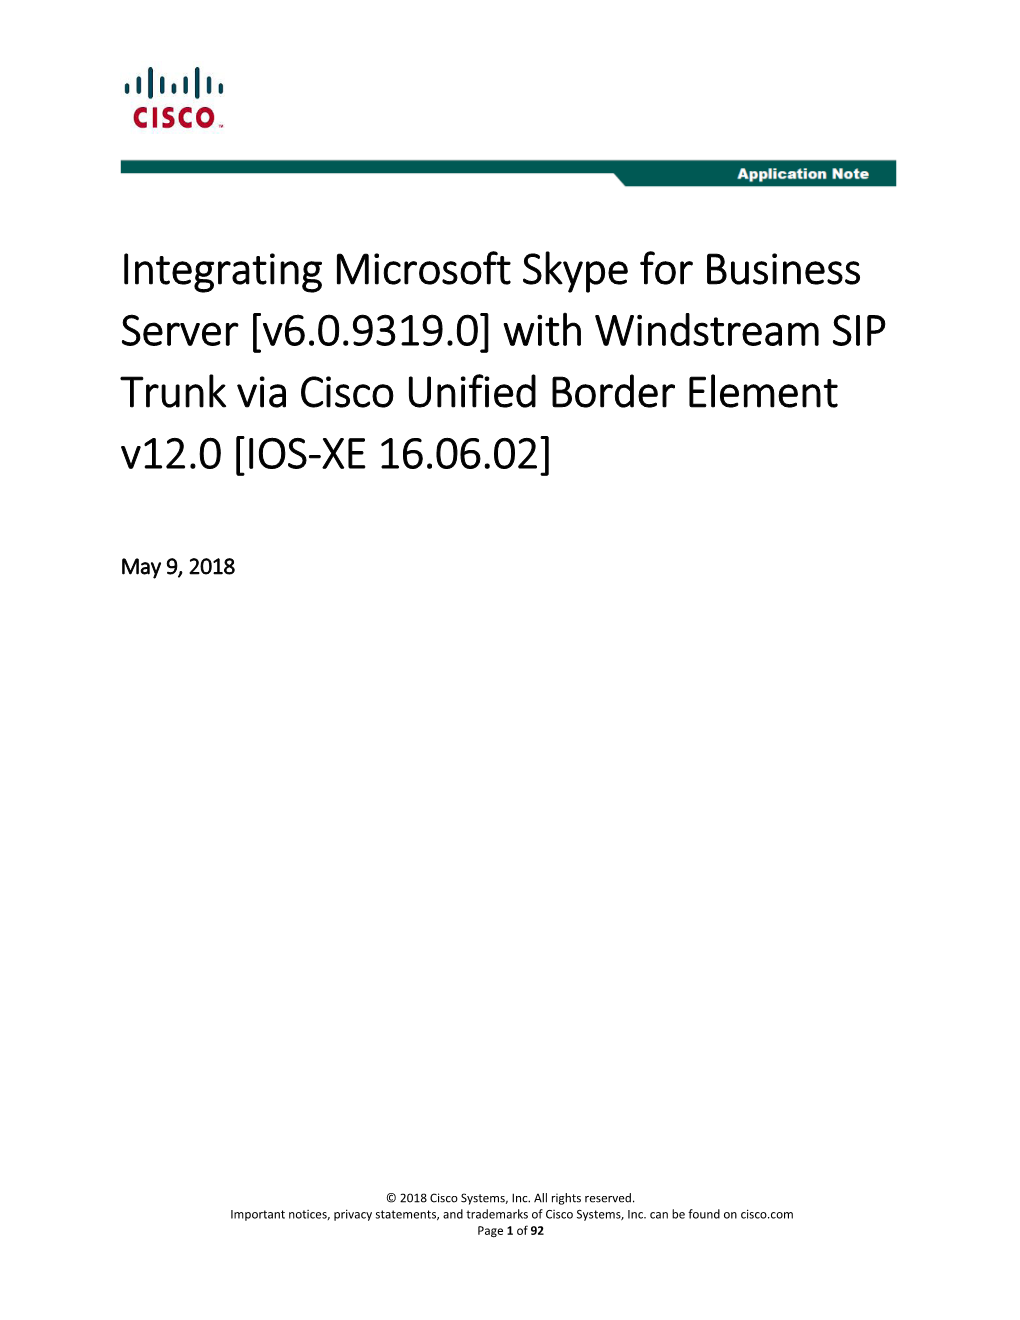 Integrating Microsoft Skype for Business Server [V6.0.9319.0] with Windstream SIP Trunk Via Cisco Unified Border Element V12.0 [IOS-XE 16.06.02]